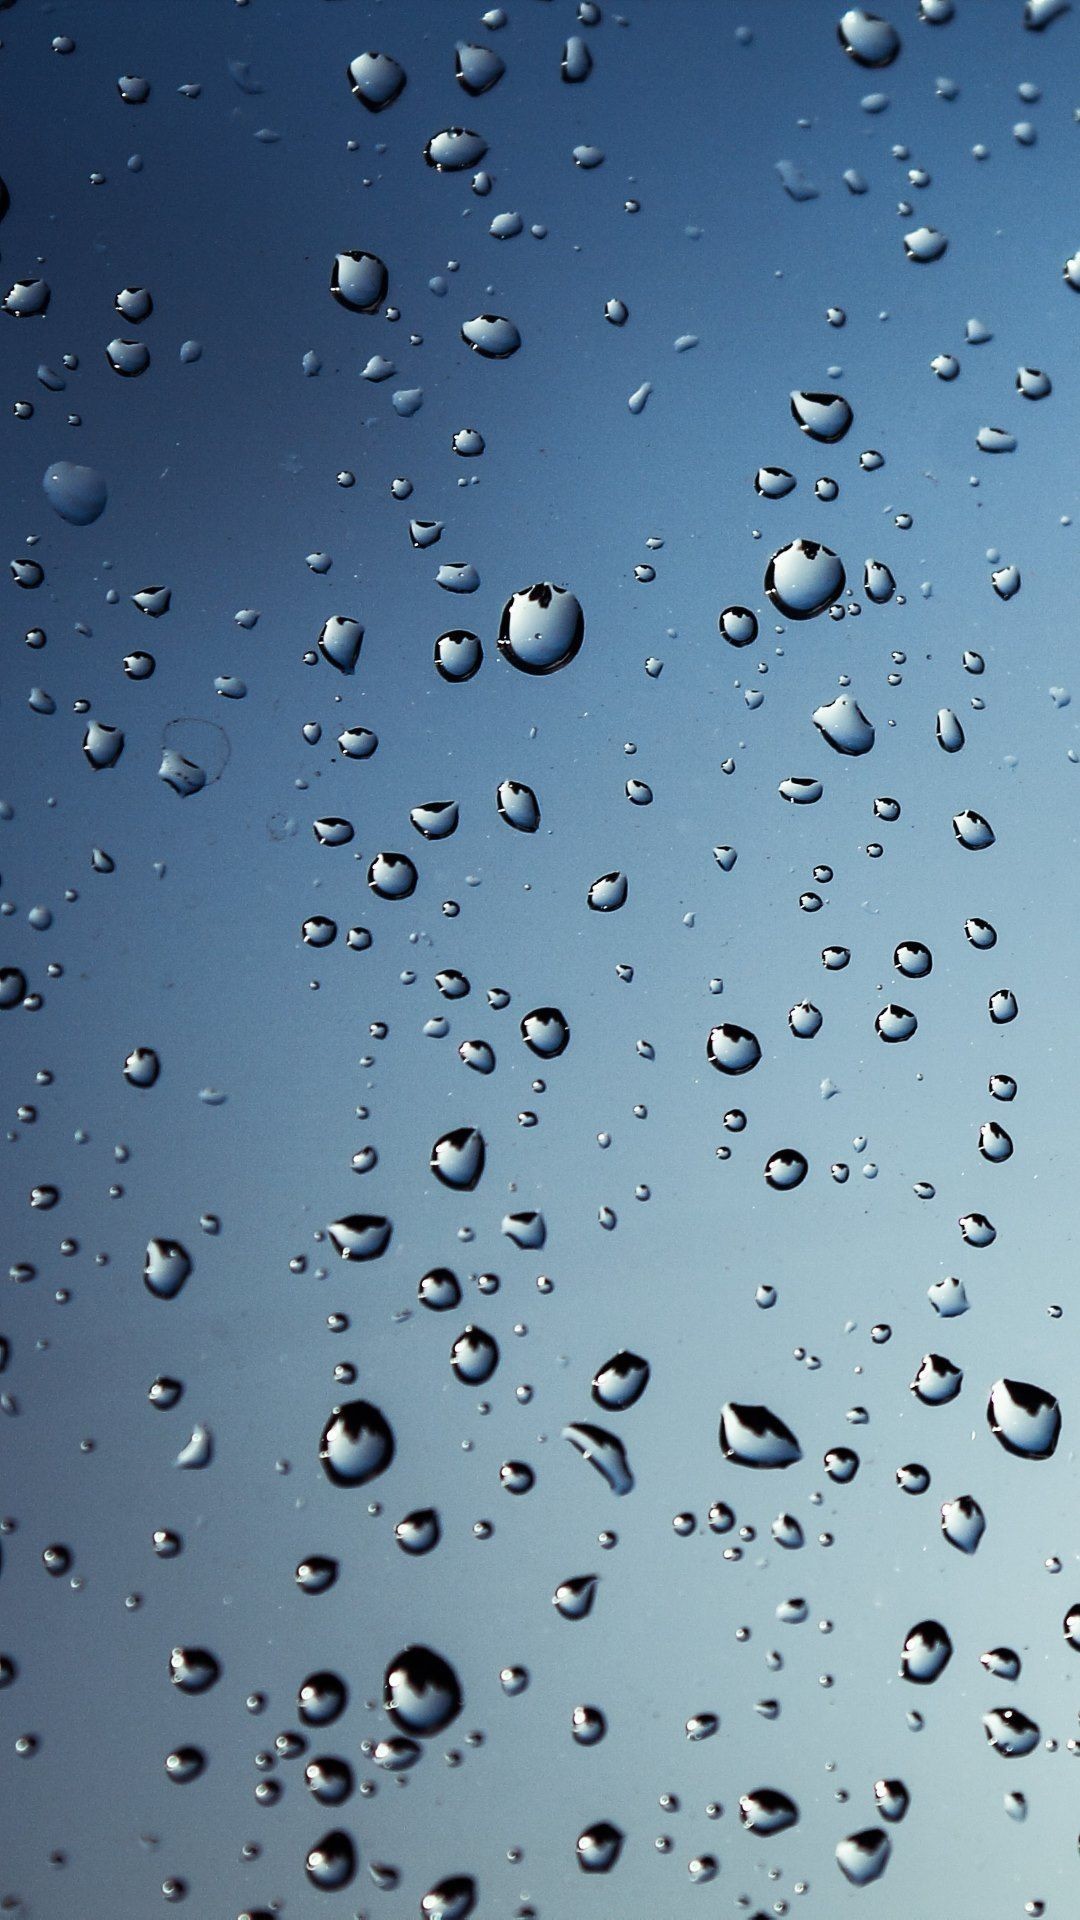 1080x1920 Rain Drops on Window #photo #wallpaper #free Photographer: Krzysztof Pluta.  License: Public Domain CC0